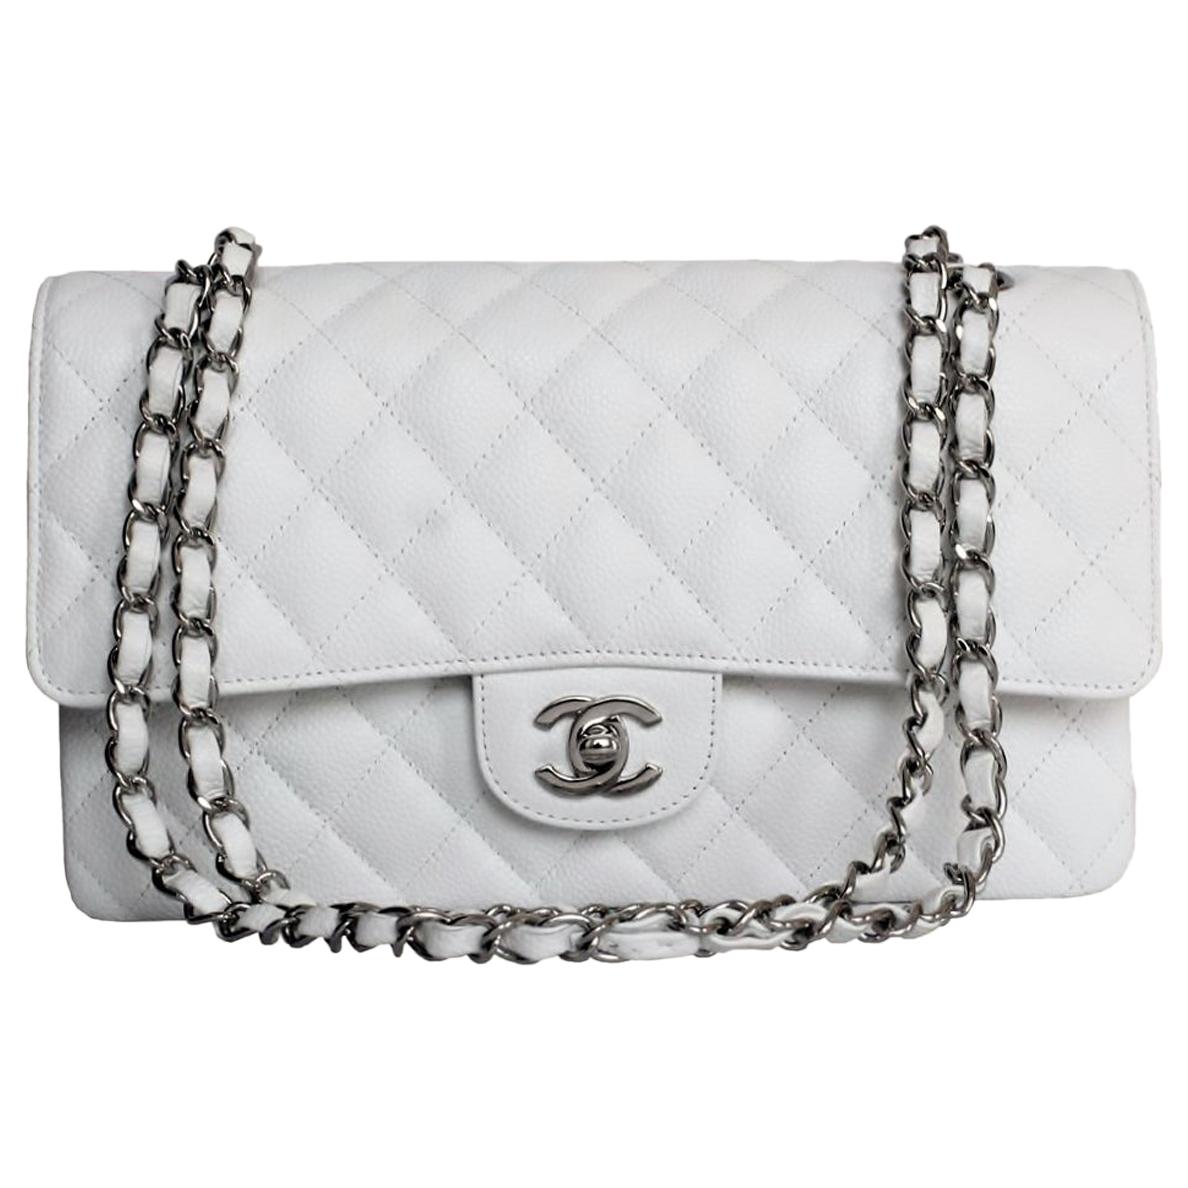 Chanel 2.55 Classic White Bag